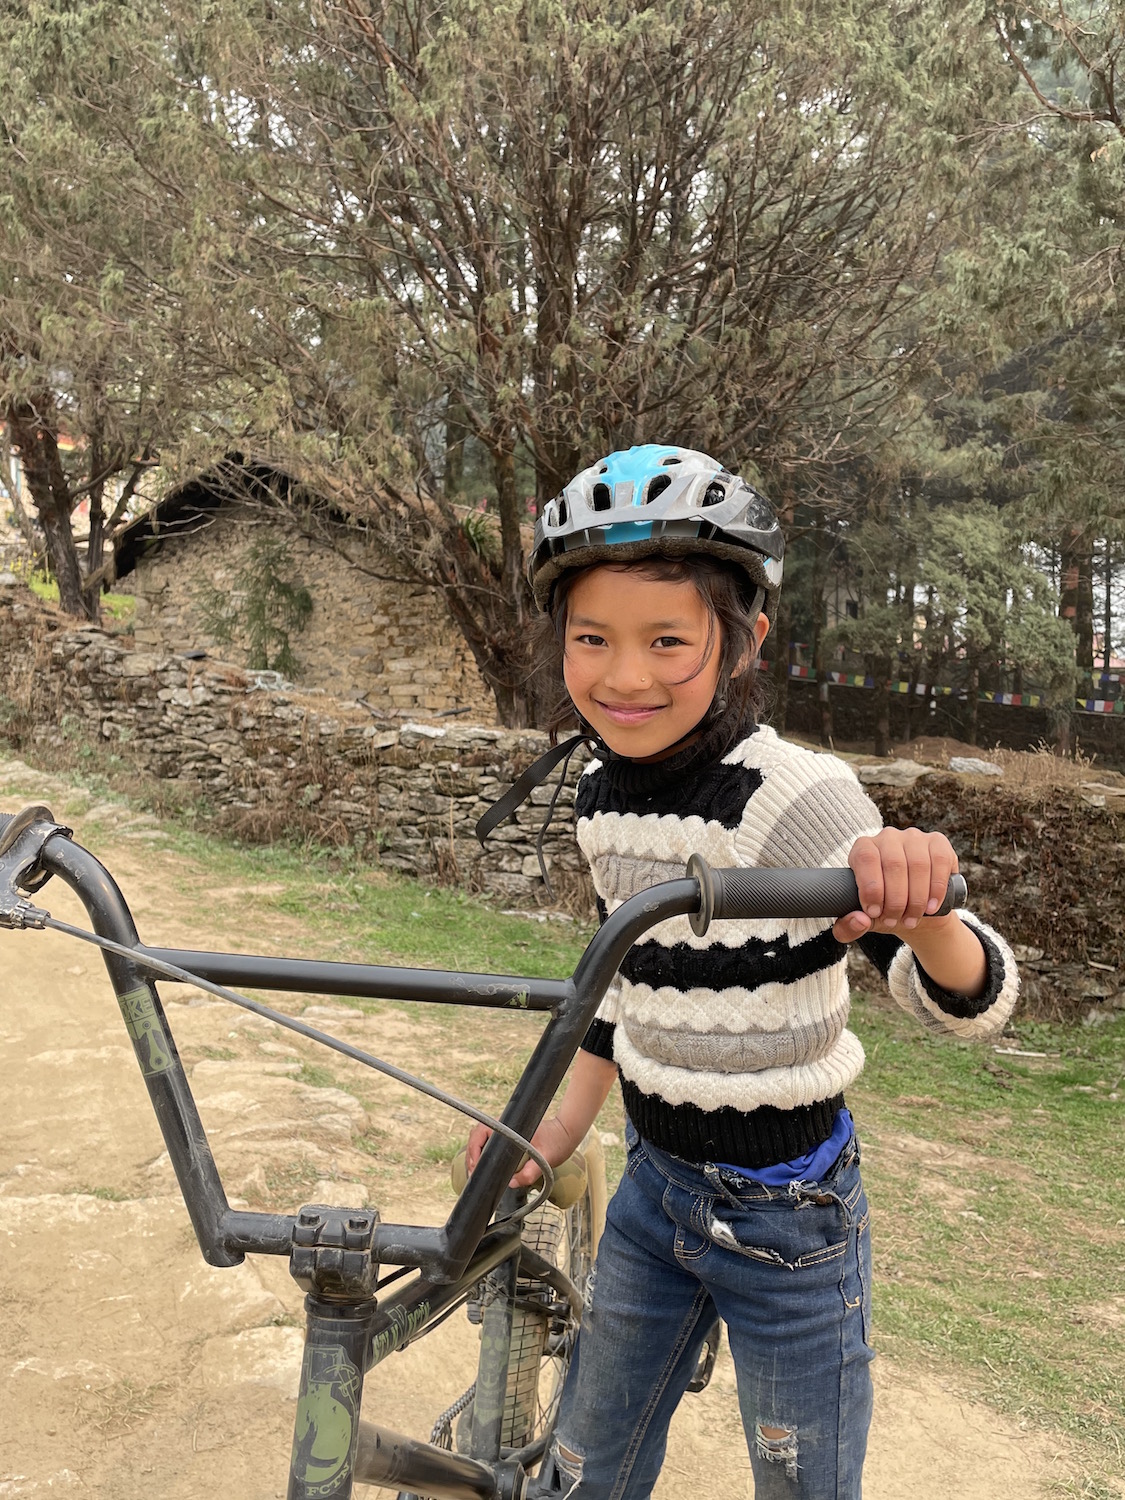 Nepal pushes mountain bike tourism NT 1